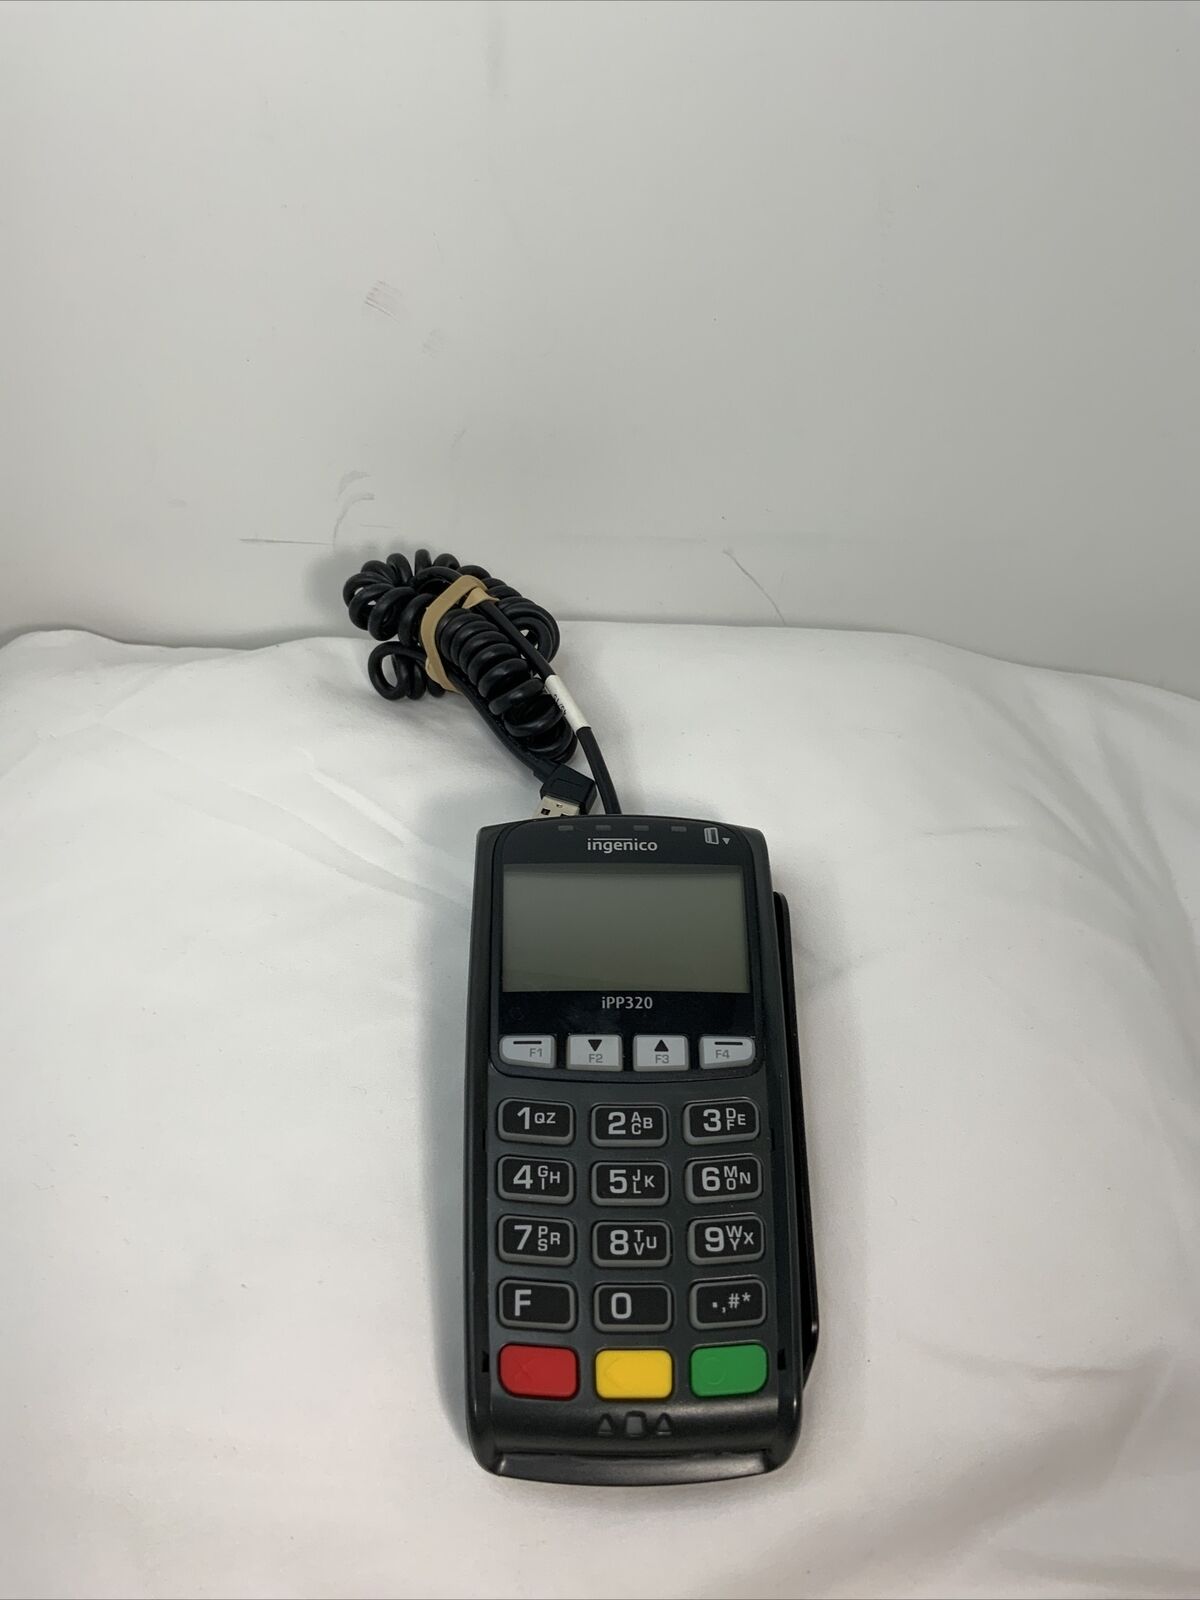 Max 81% OFF Ingenico New York Mall iPP320 Pin Pad Payment Terminal Reader Swipe IPP32 Card